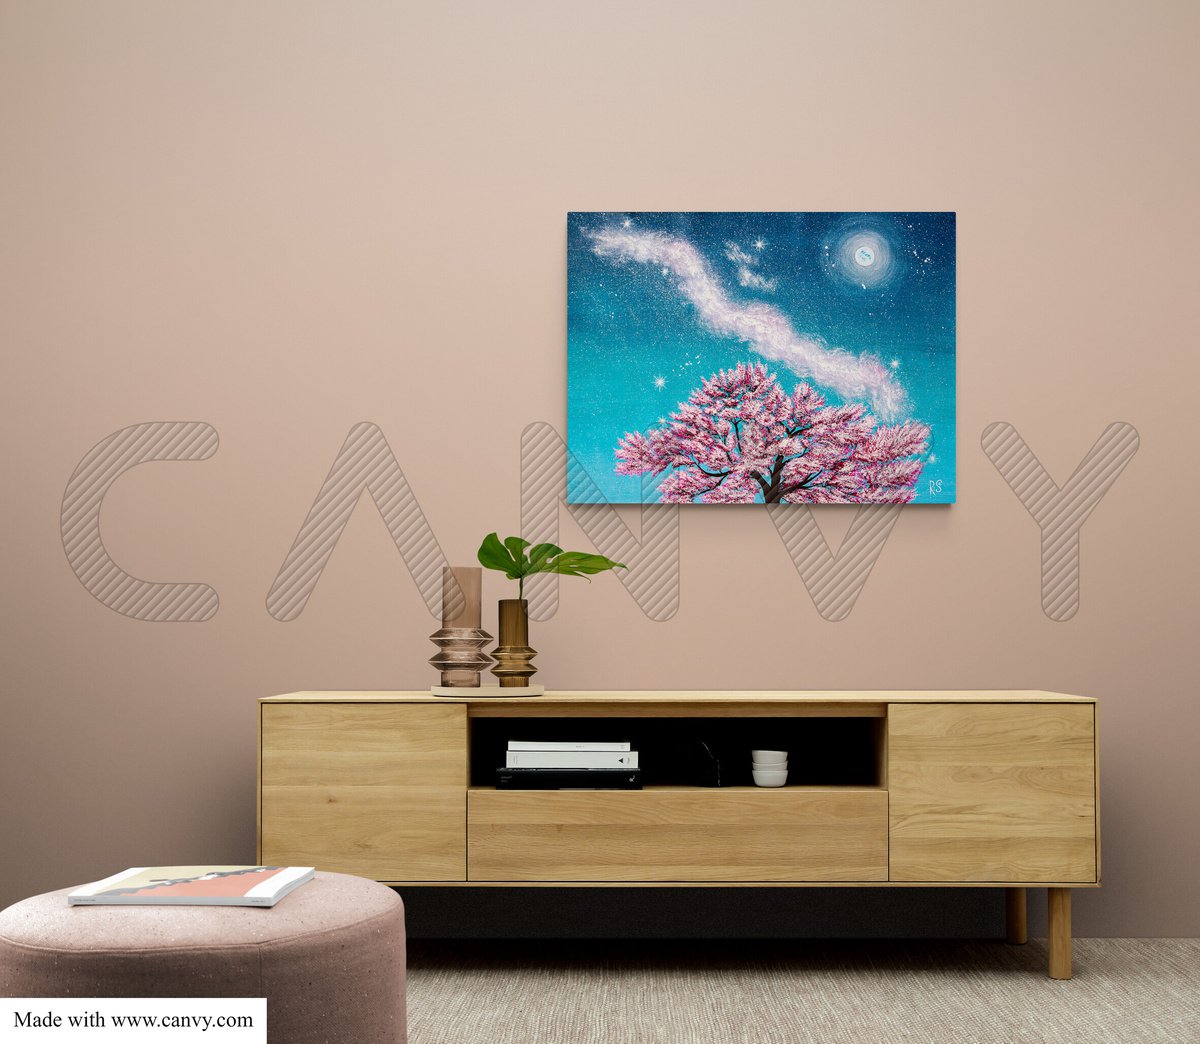 SAKURA BLOSSOM - blooming cherry tree, spring blossom, cerulean sky, pink petals by Rimma Savina